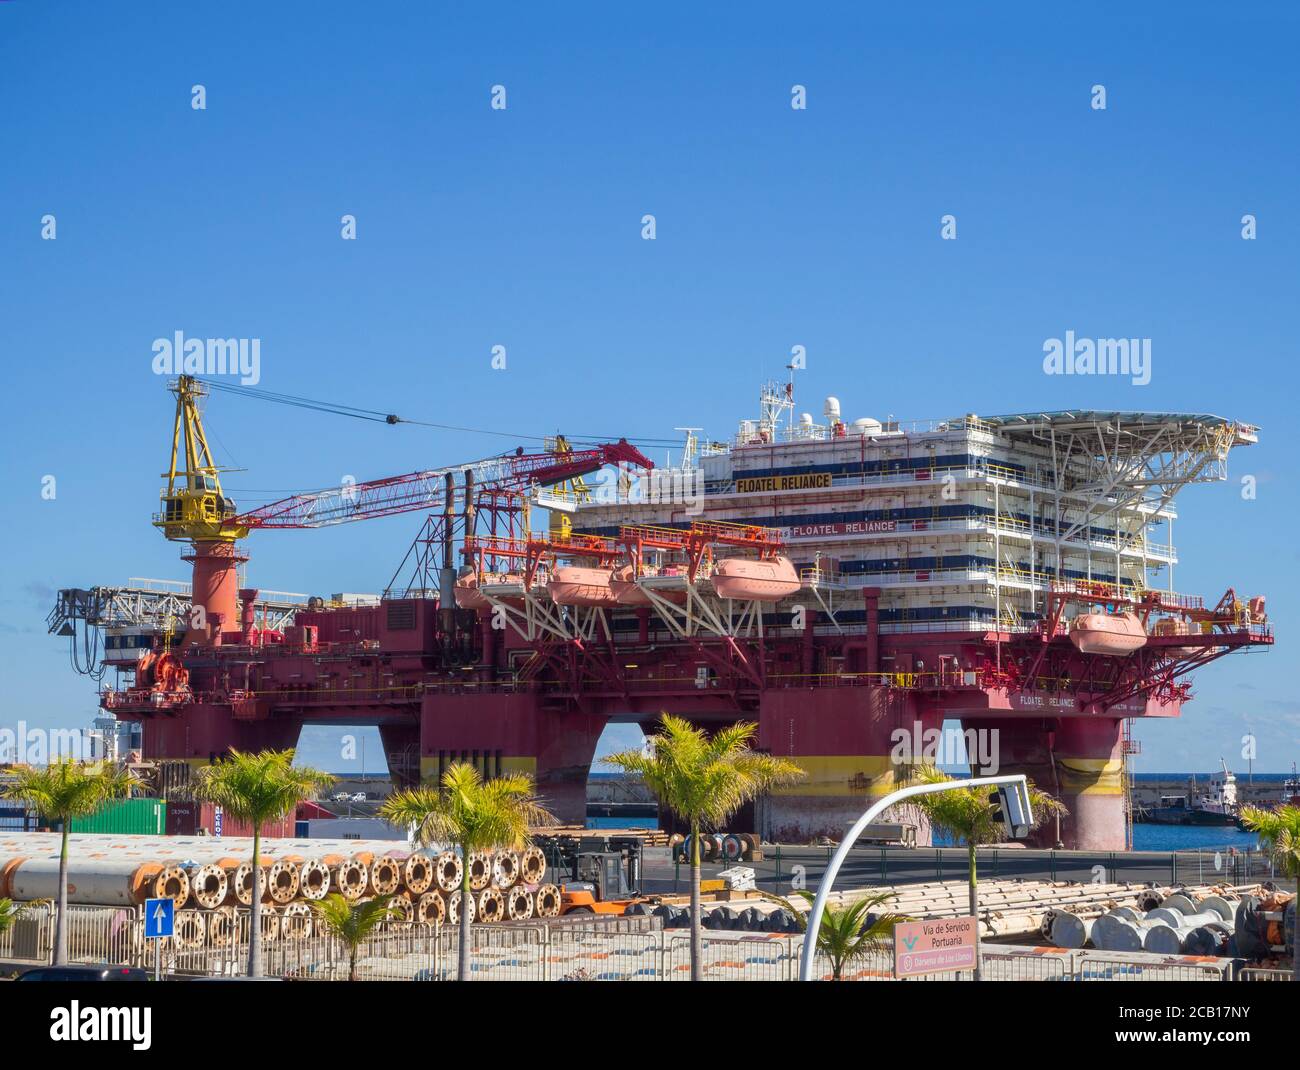 Spain, Canary islands, Tenerife, Santa Cruz de Tenerife, December 27, 2017: Flotel, Floatel Reliance platform, floating hotel with huge crane and Stock Photo